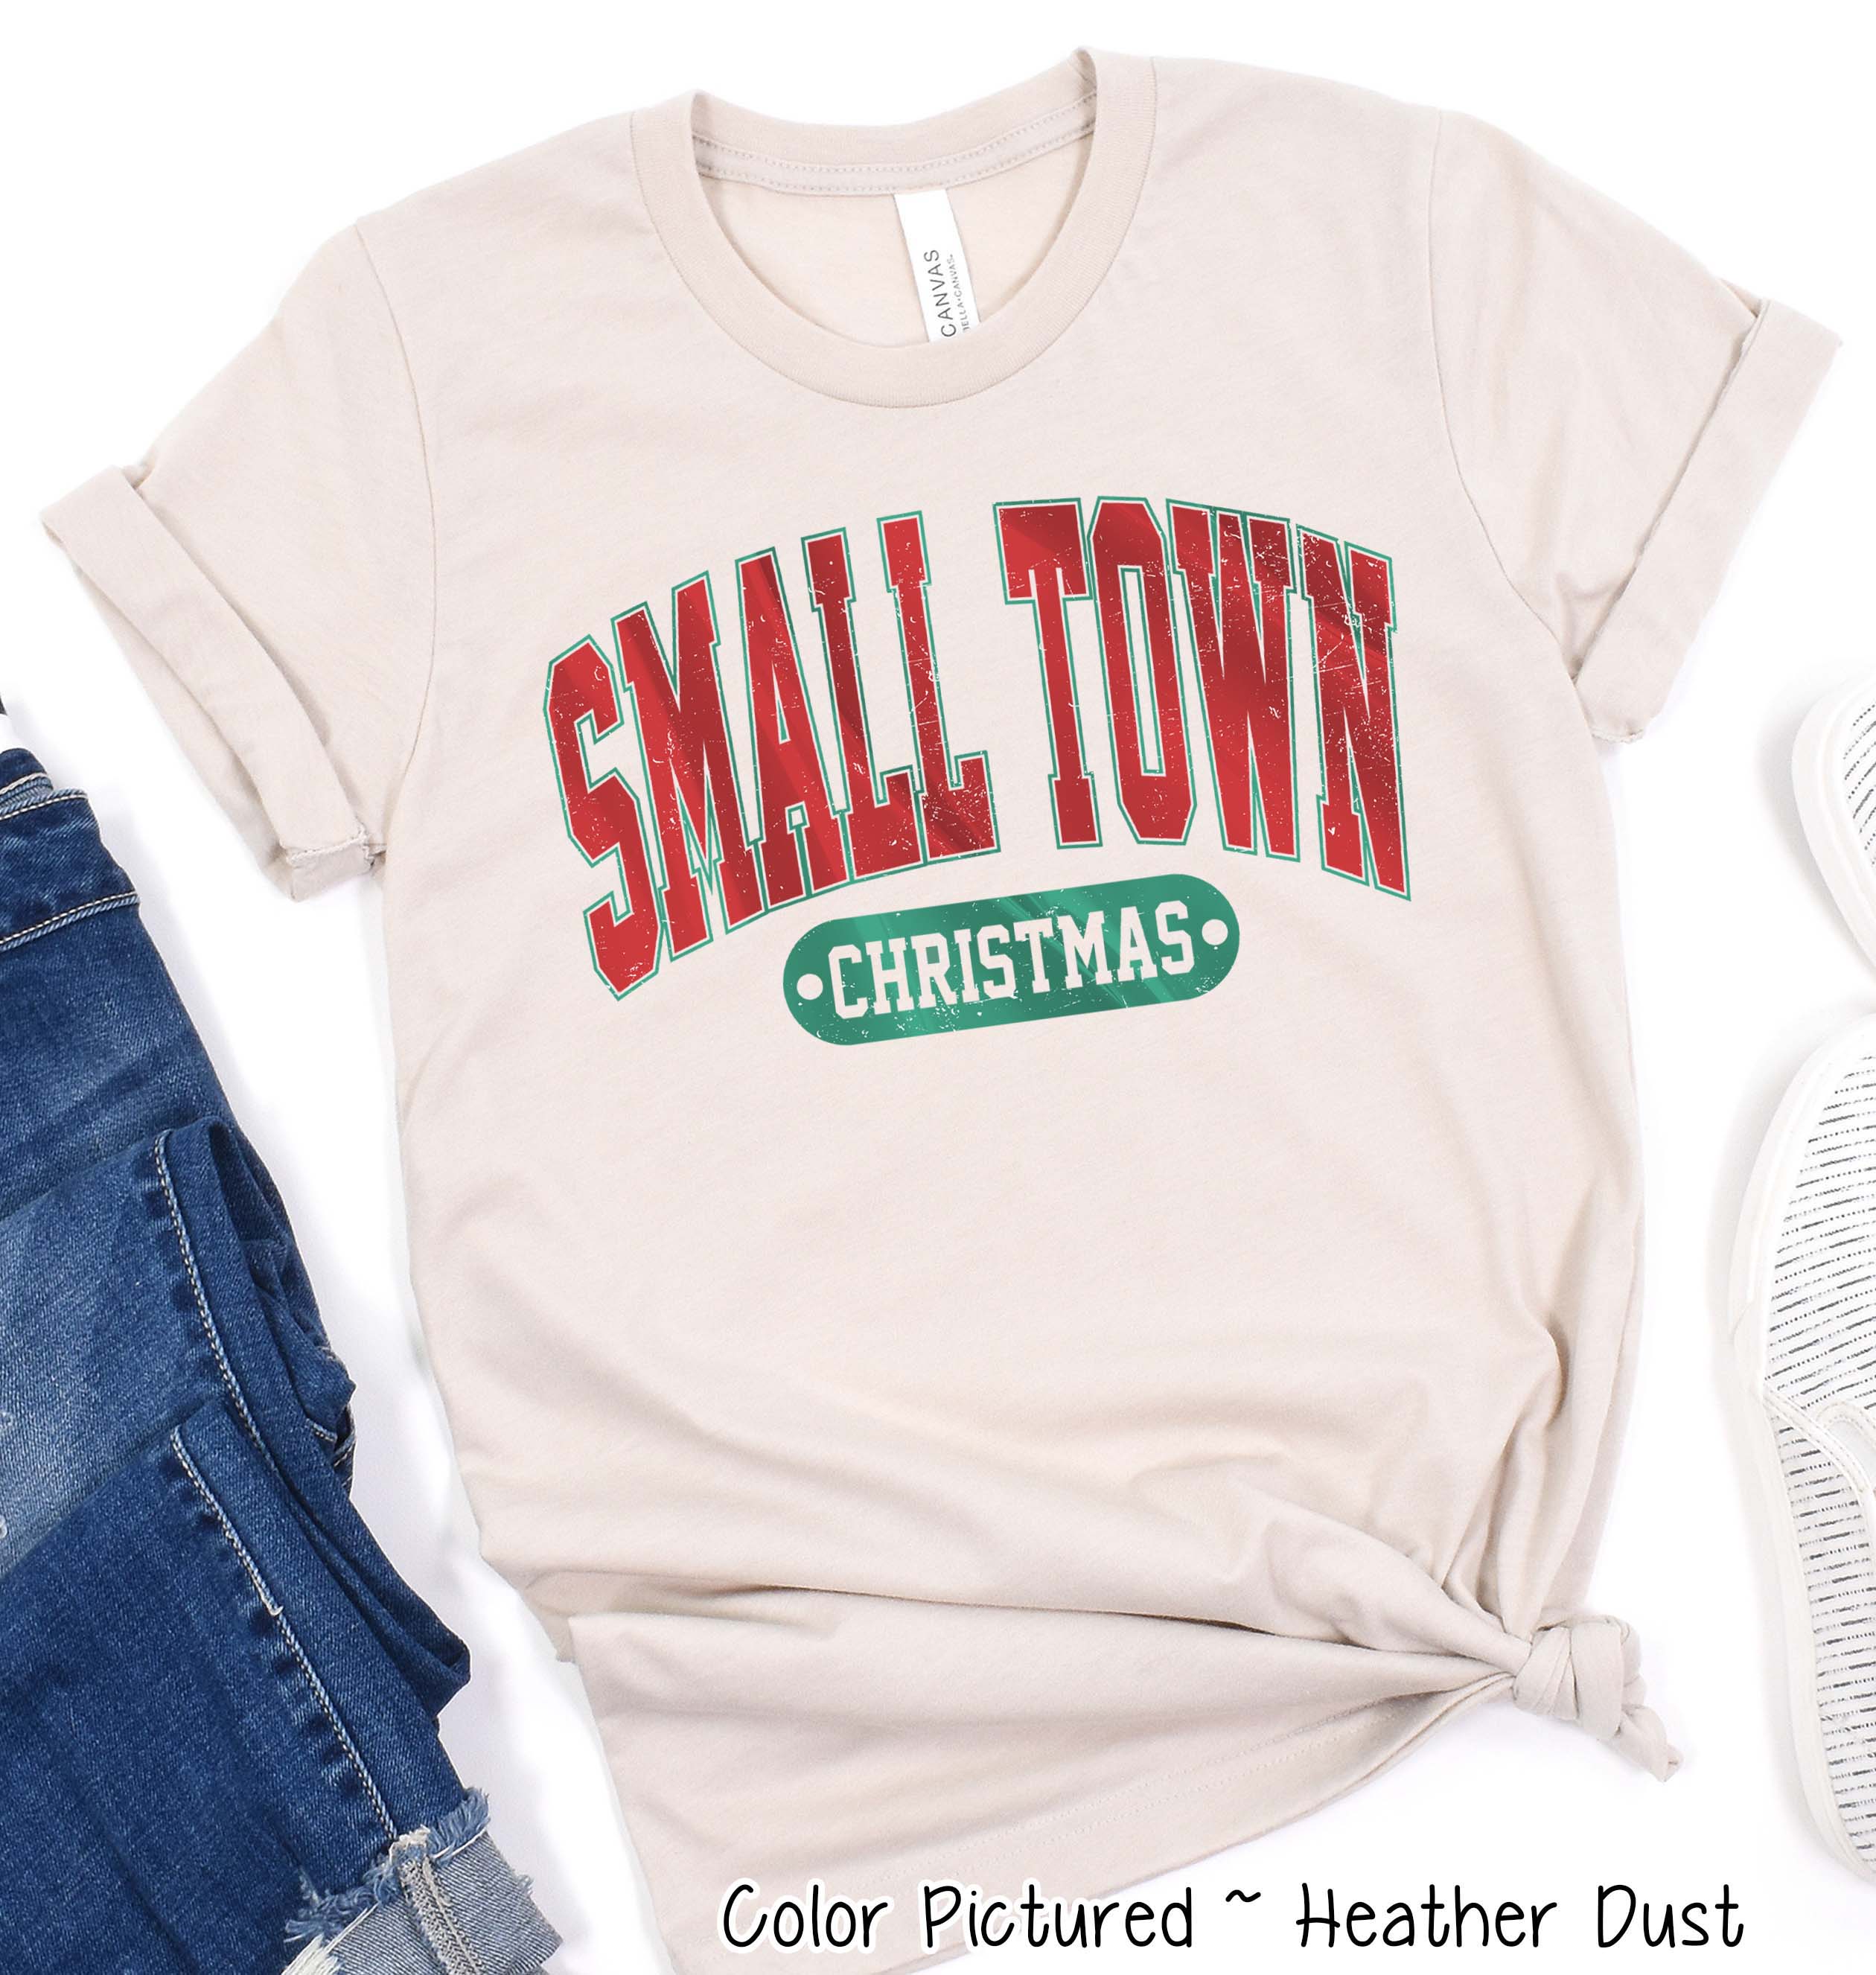 Retro Small Town Christmas Tee or Sweatshirt